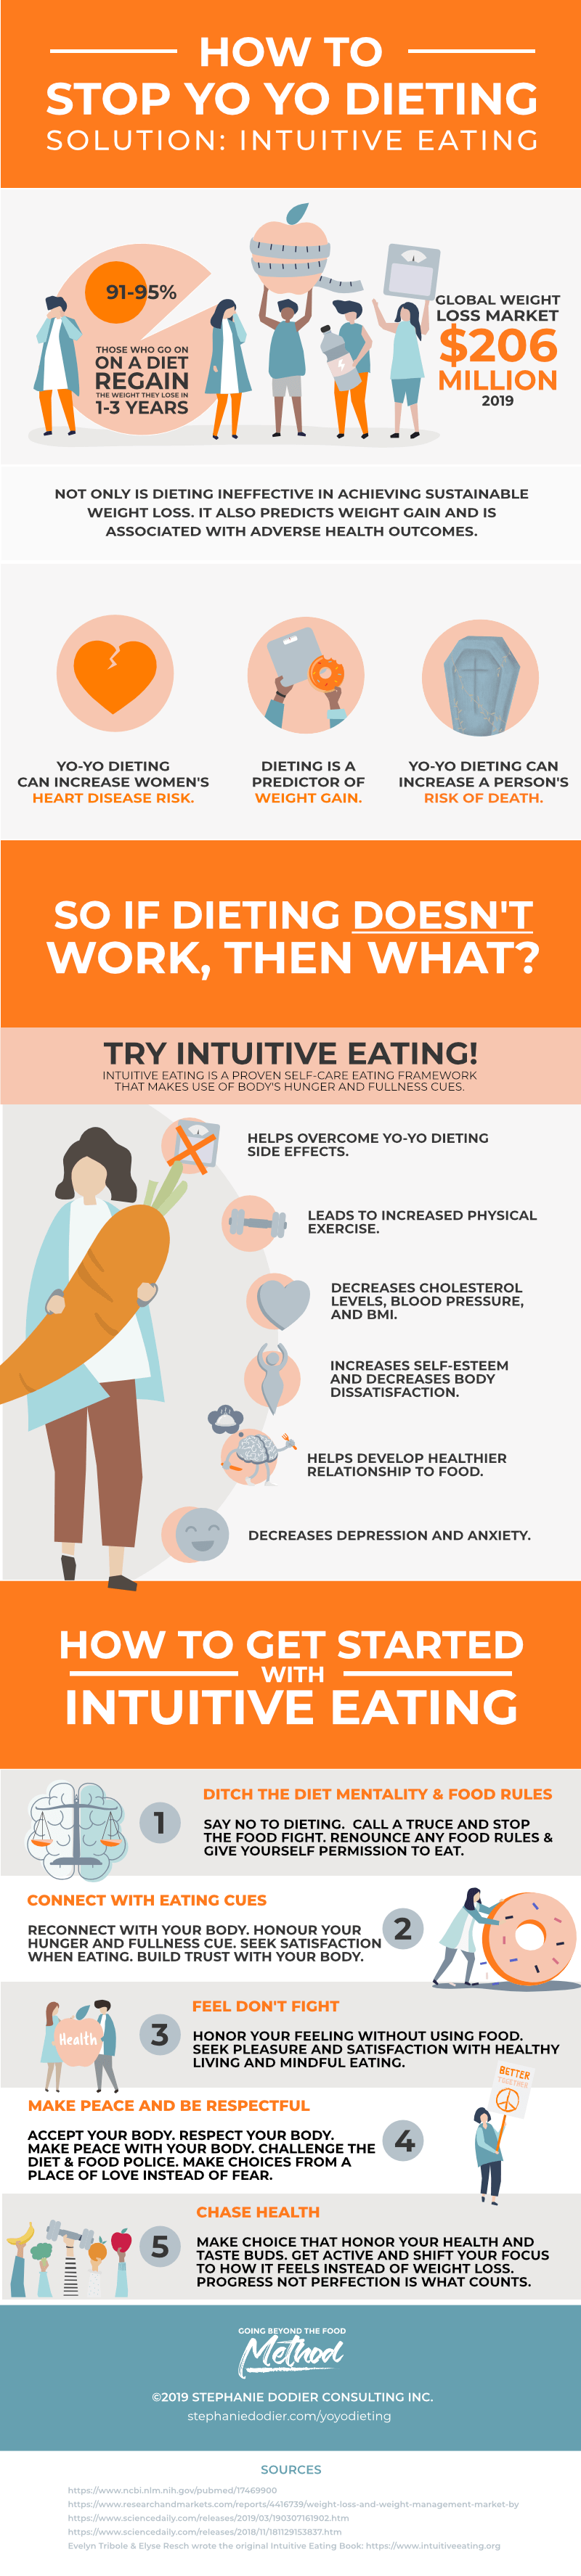 how to eat intuiri